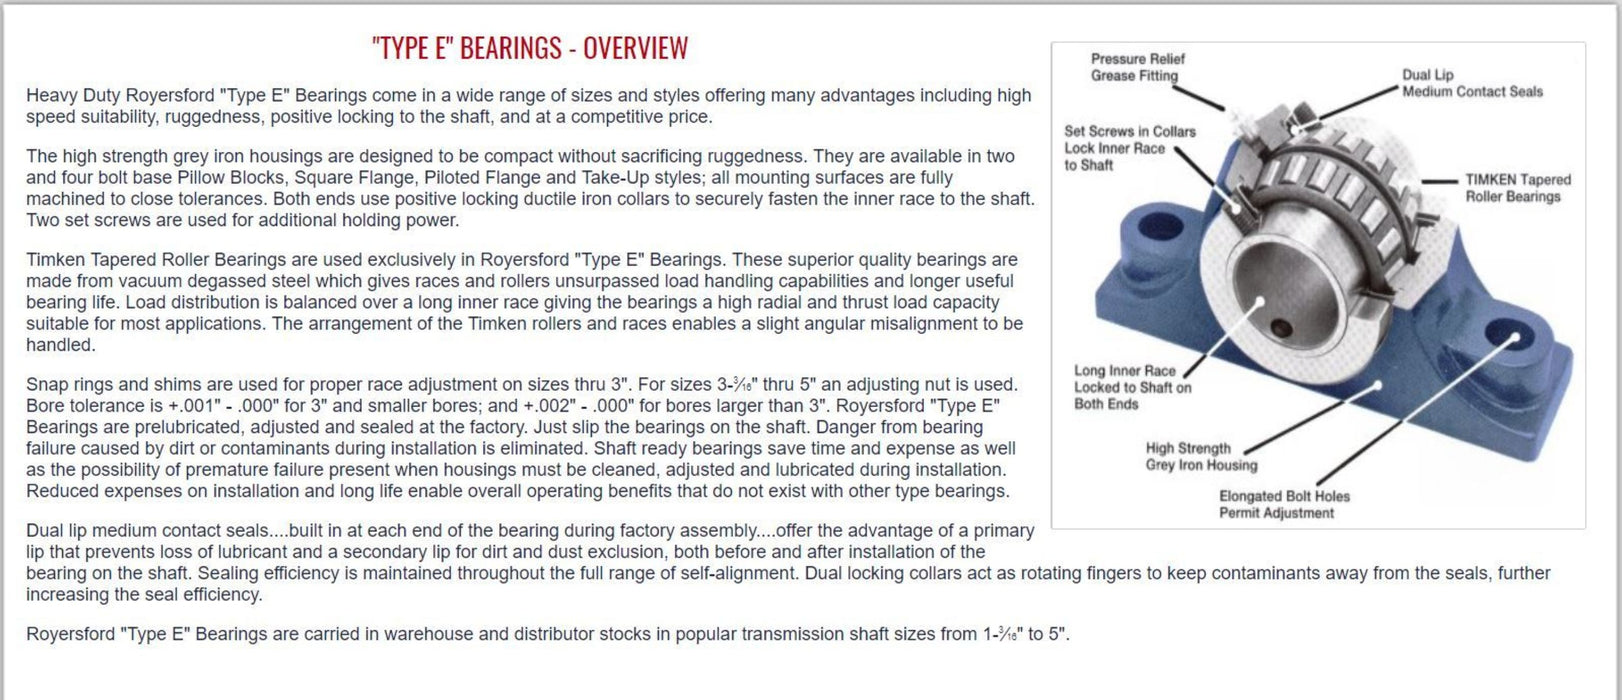 20-02-0114, Royersford TYPE E Pillow Block Bearing, 1-7/8 with Timken Tapered Roller Bearings